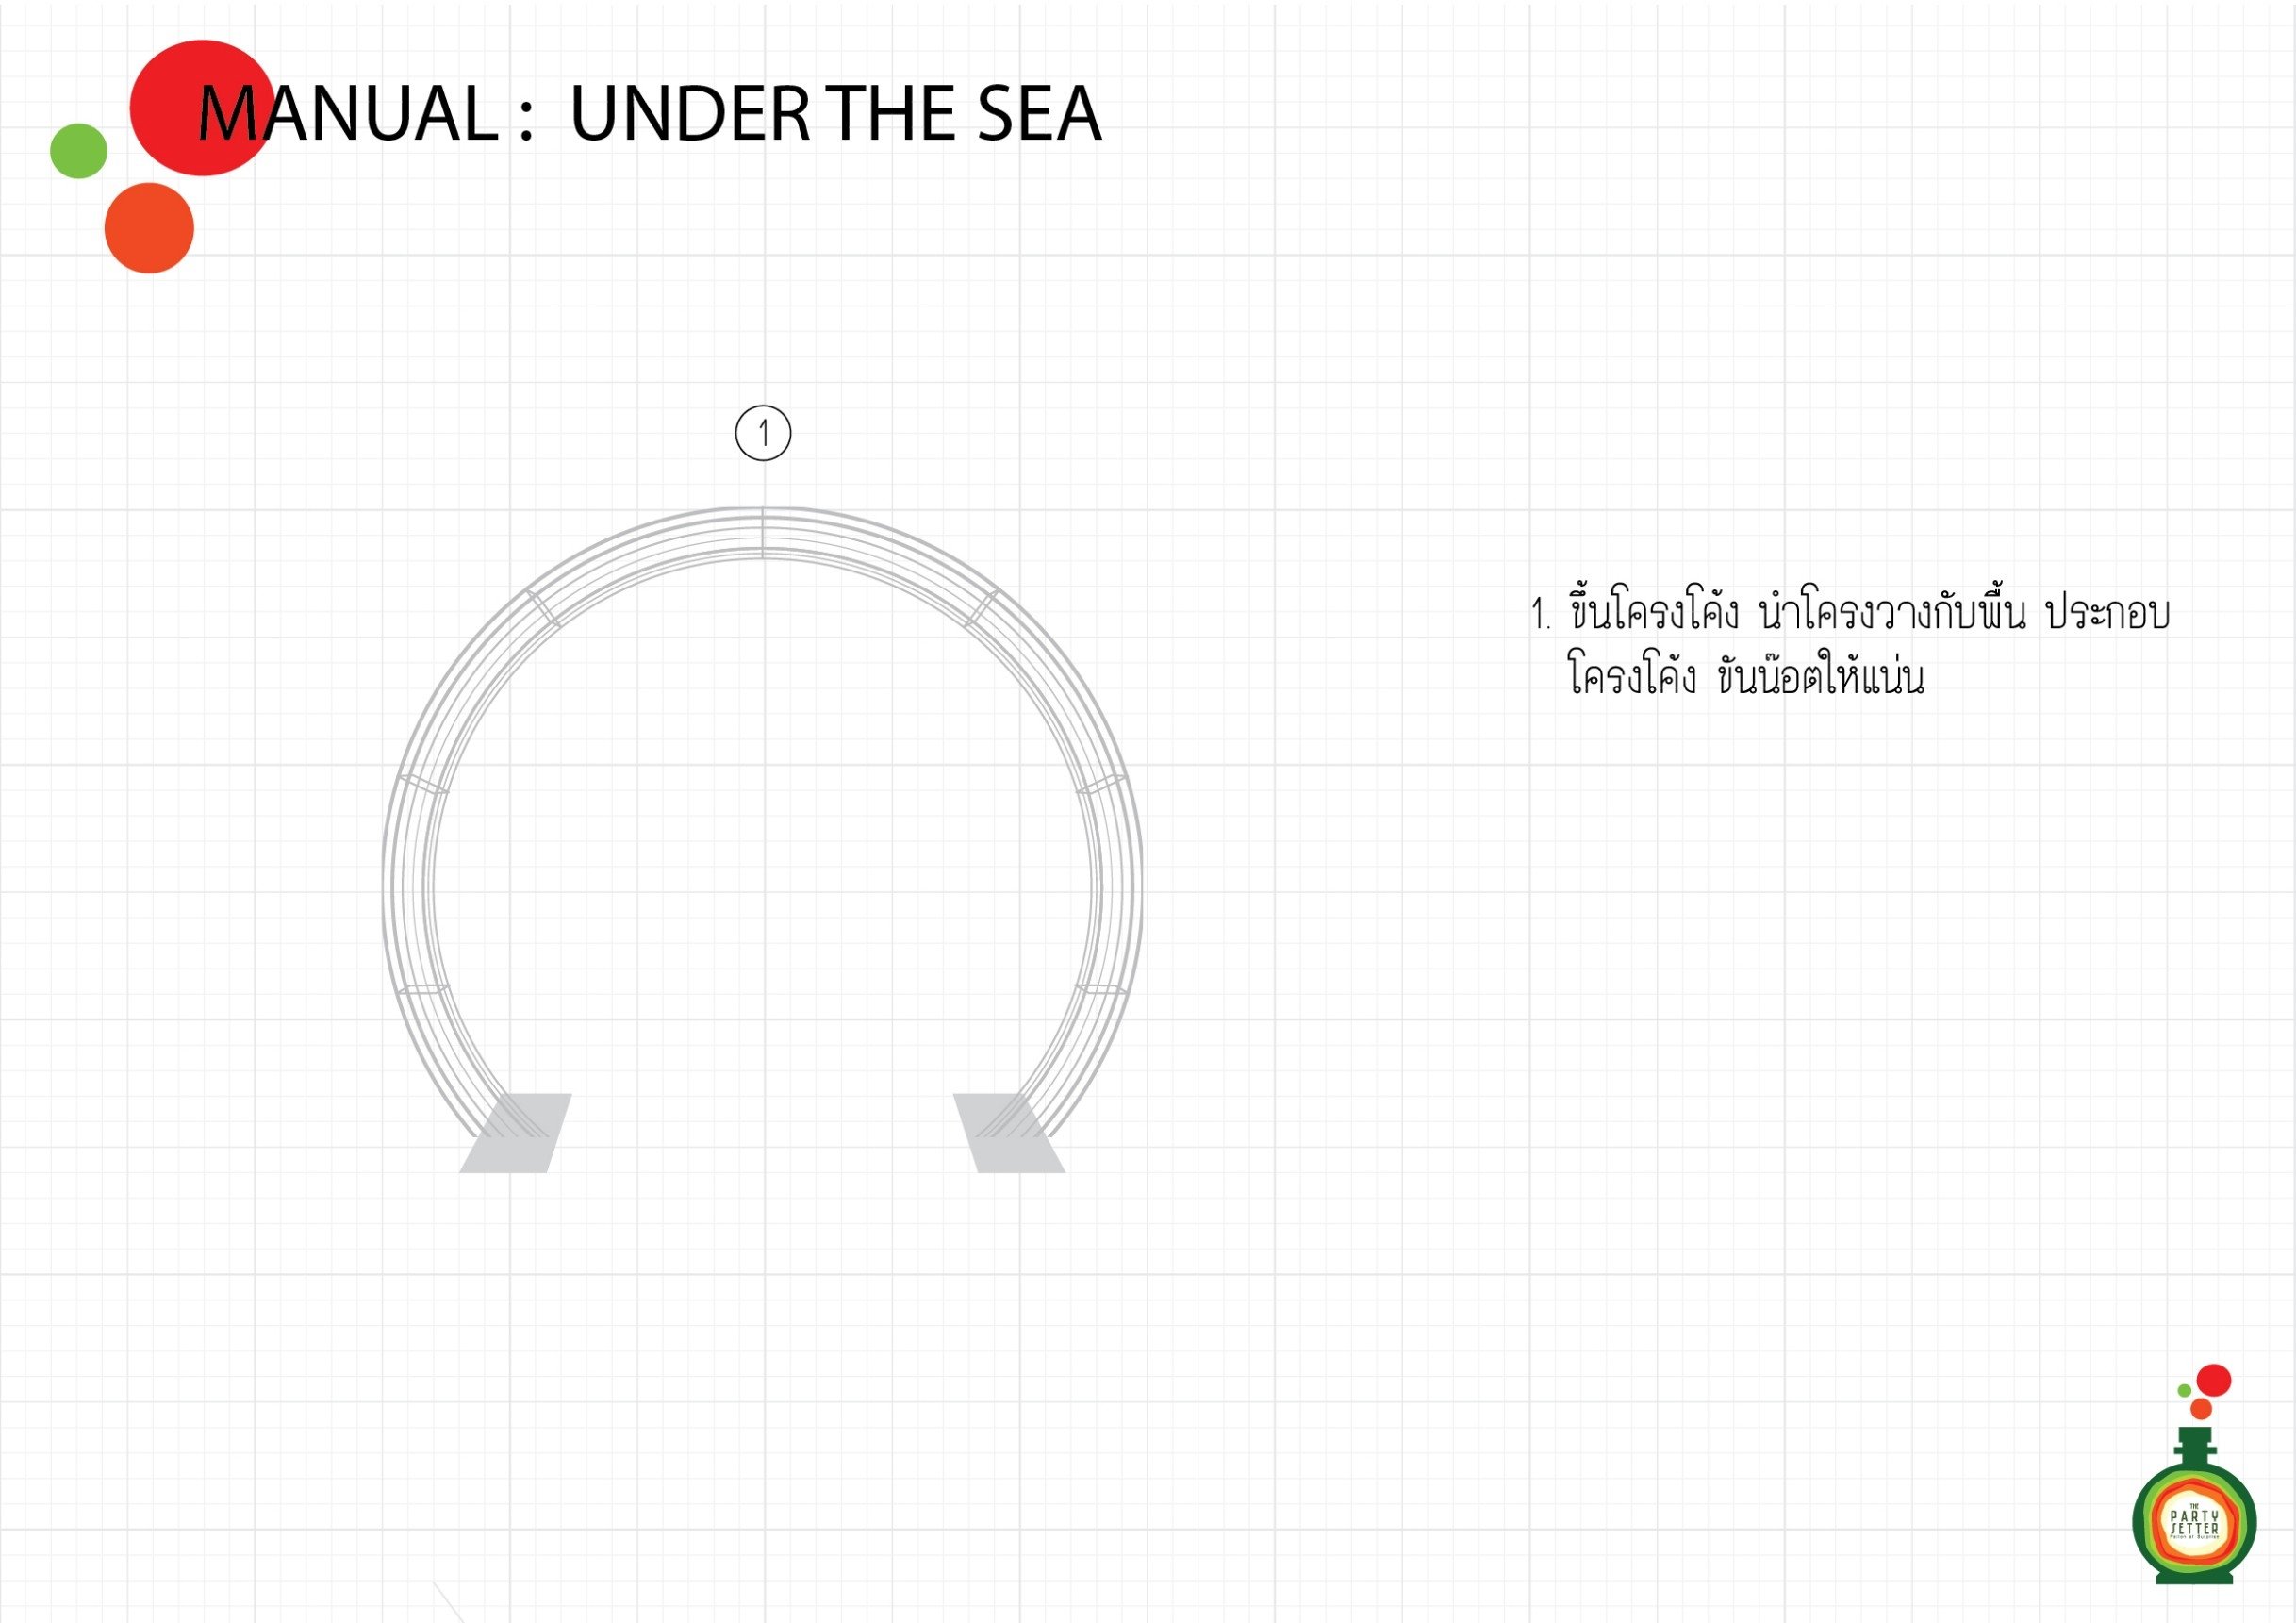 Manual_Under the Sea-01-01.jpg